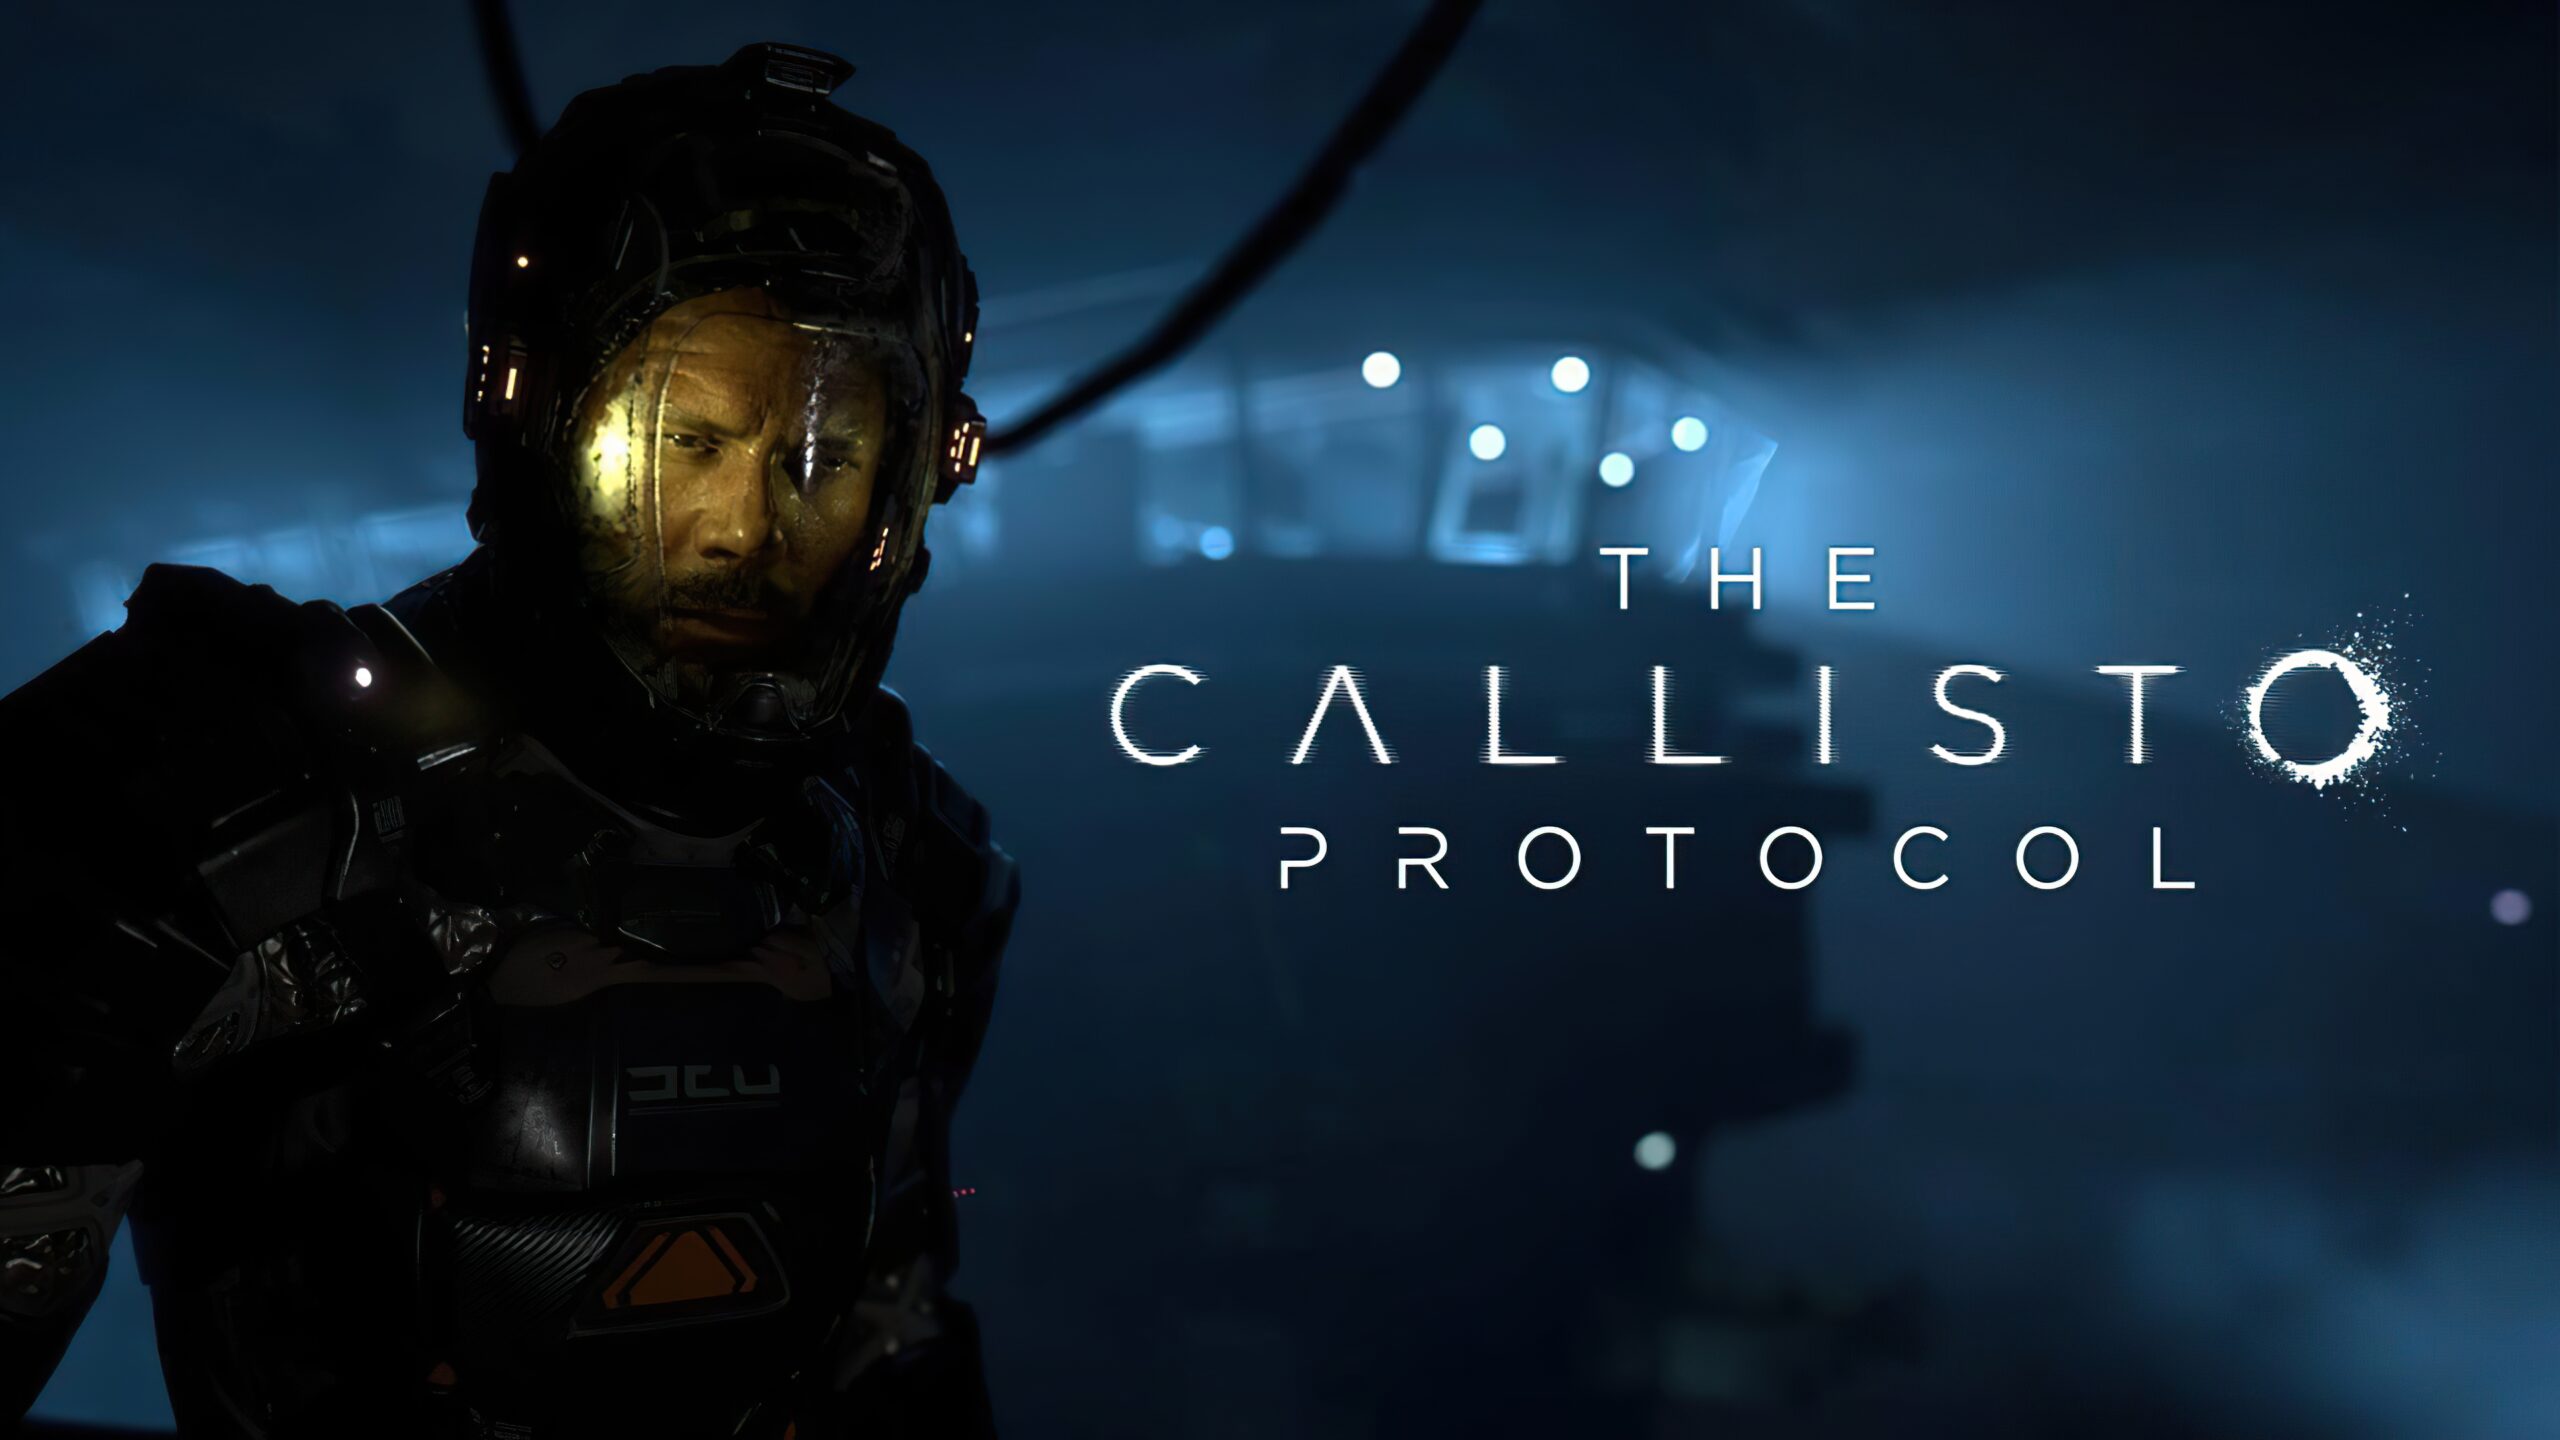 How long is The Callisto Protocol?